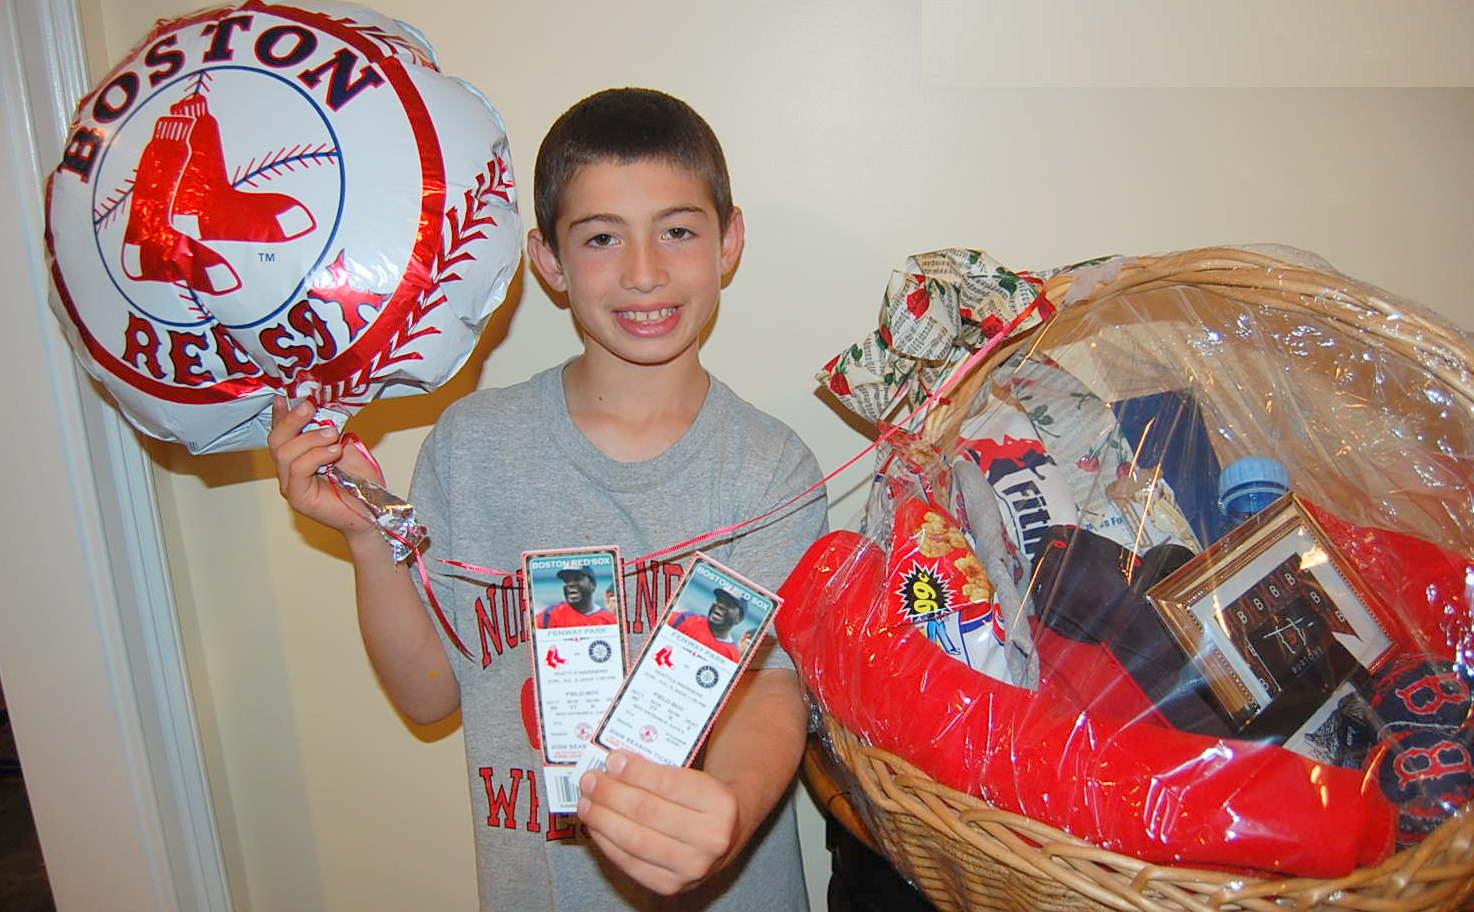 The winner of the Red Sox raffle basket C.J. Cincotta